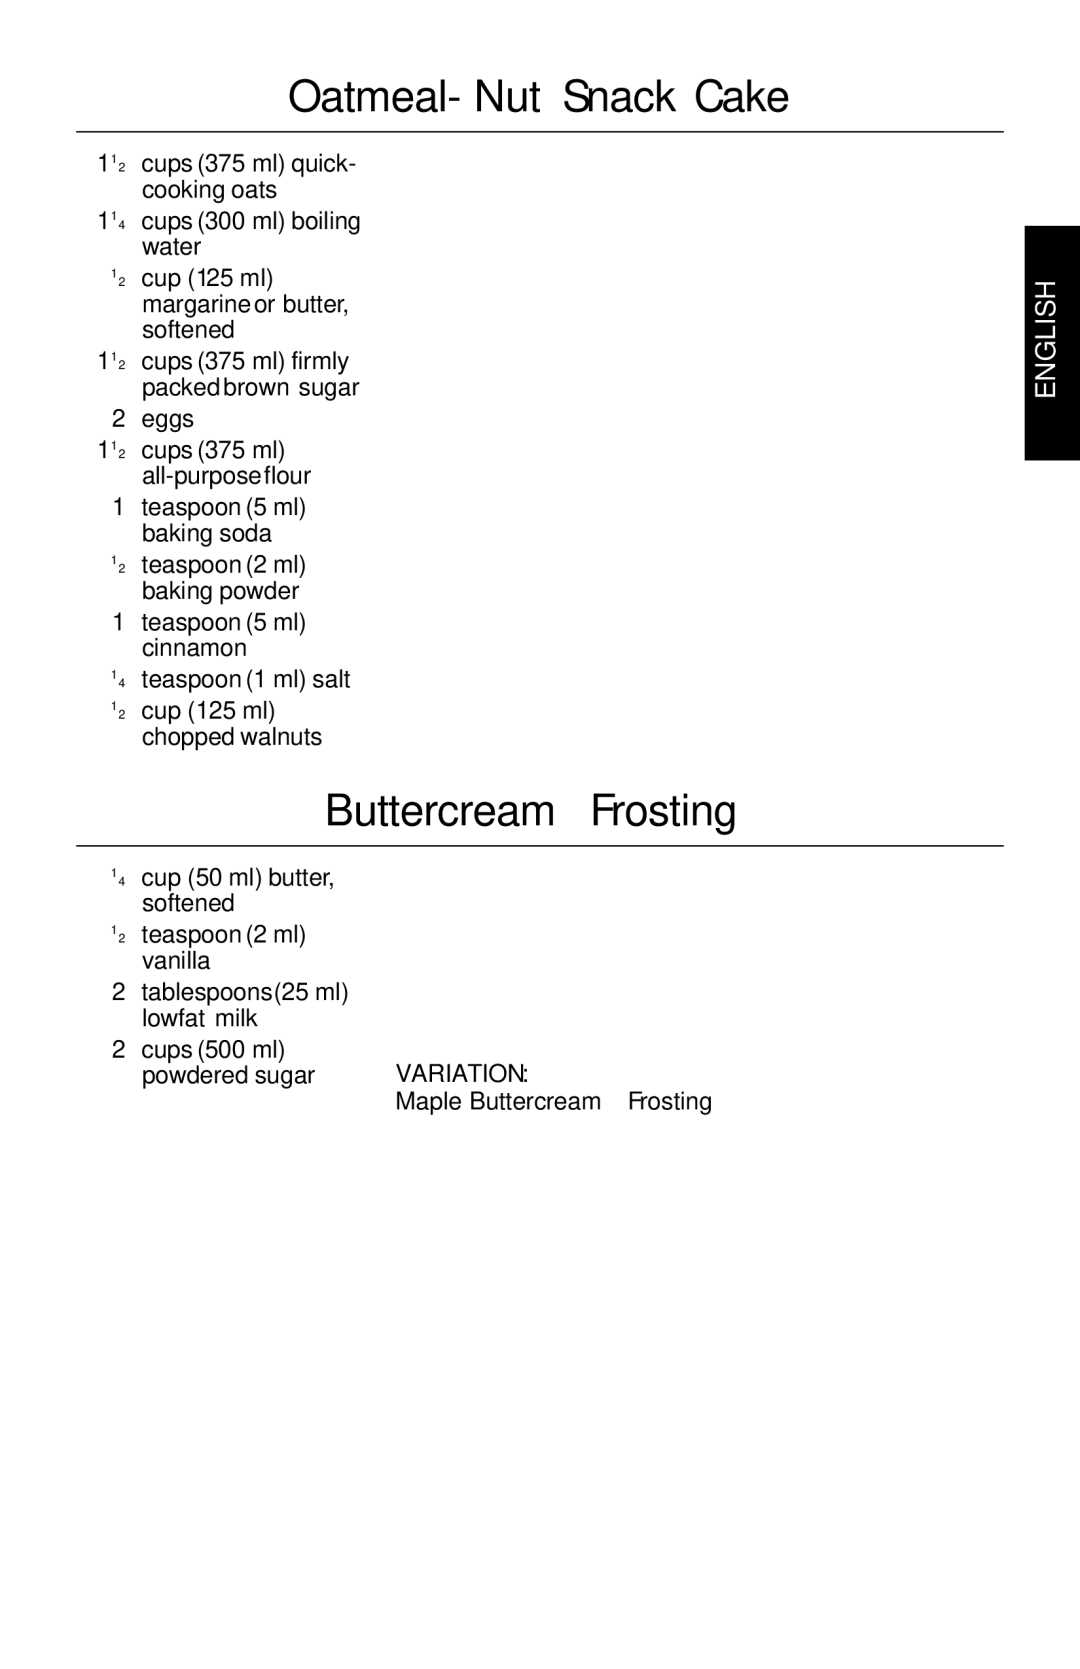 KitchenAid KHM7T, KHM9 manual Oatmeal-Nut Snack Cake, Eggs, Maple Buttercream Frosting 